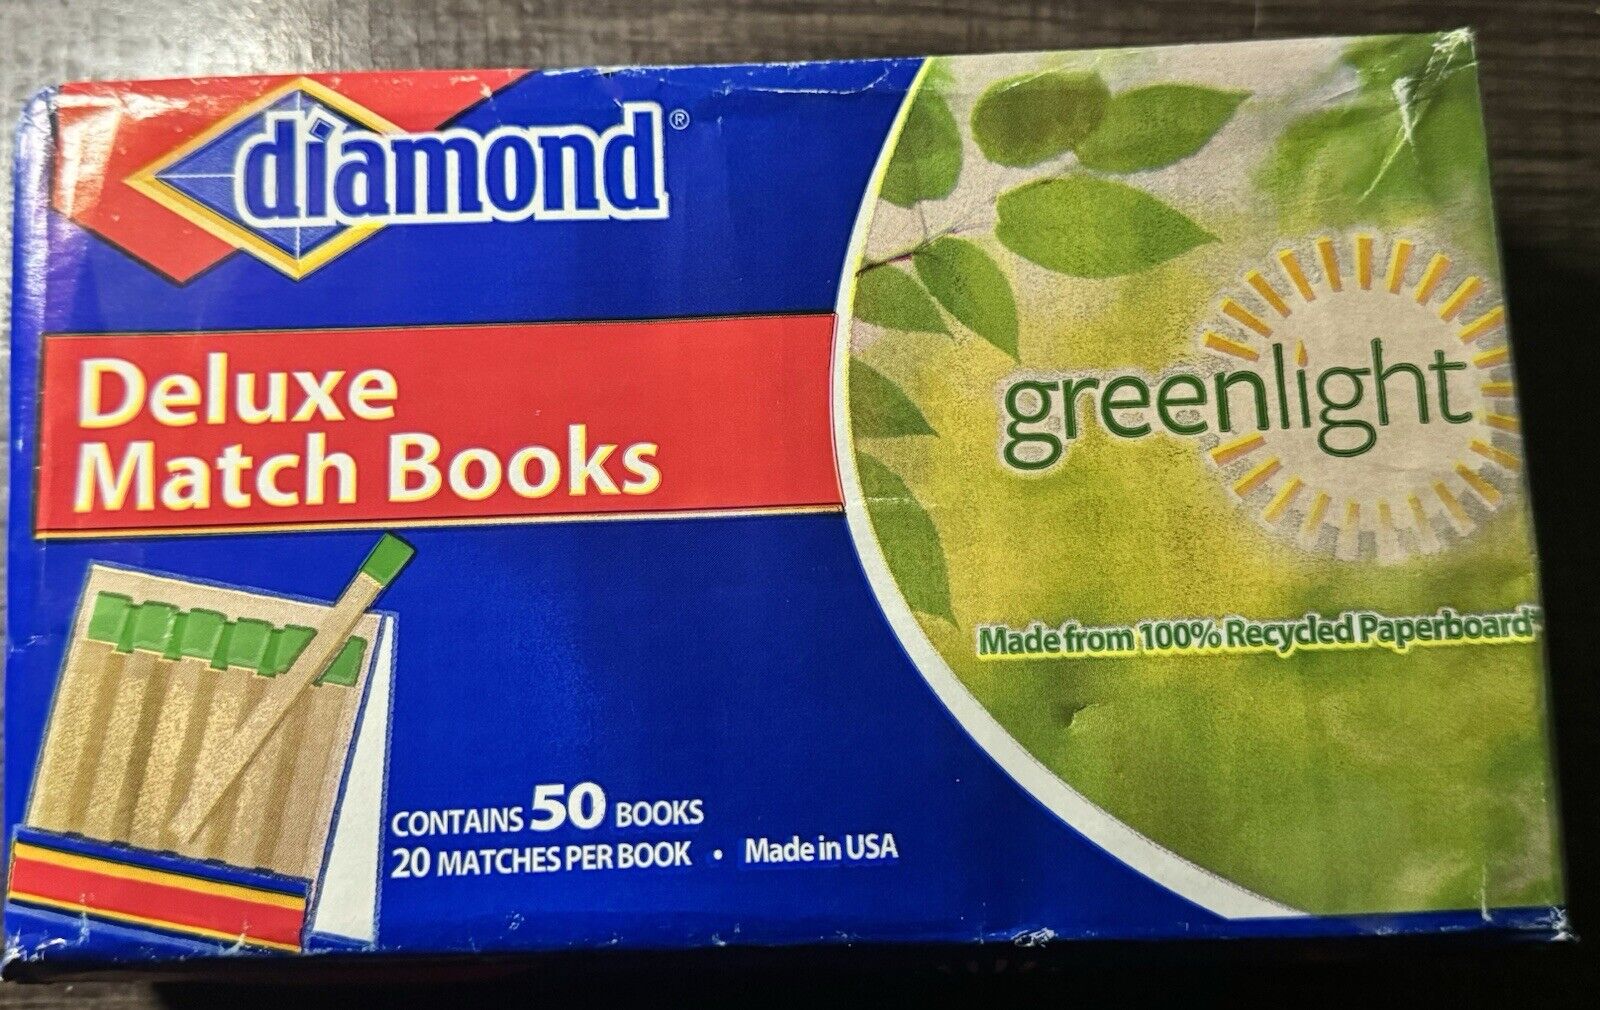 Diamond Deluxe Greenlight Match Books - 1000 Matches